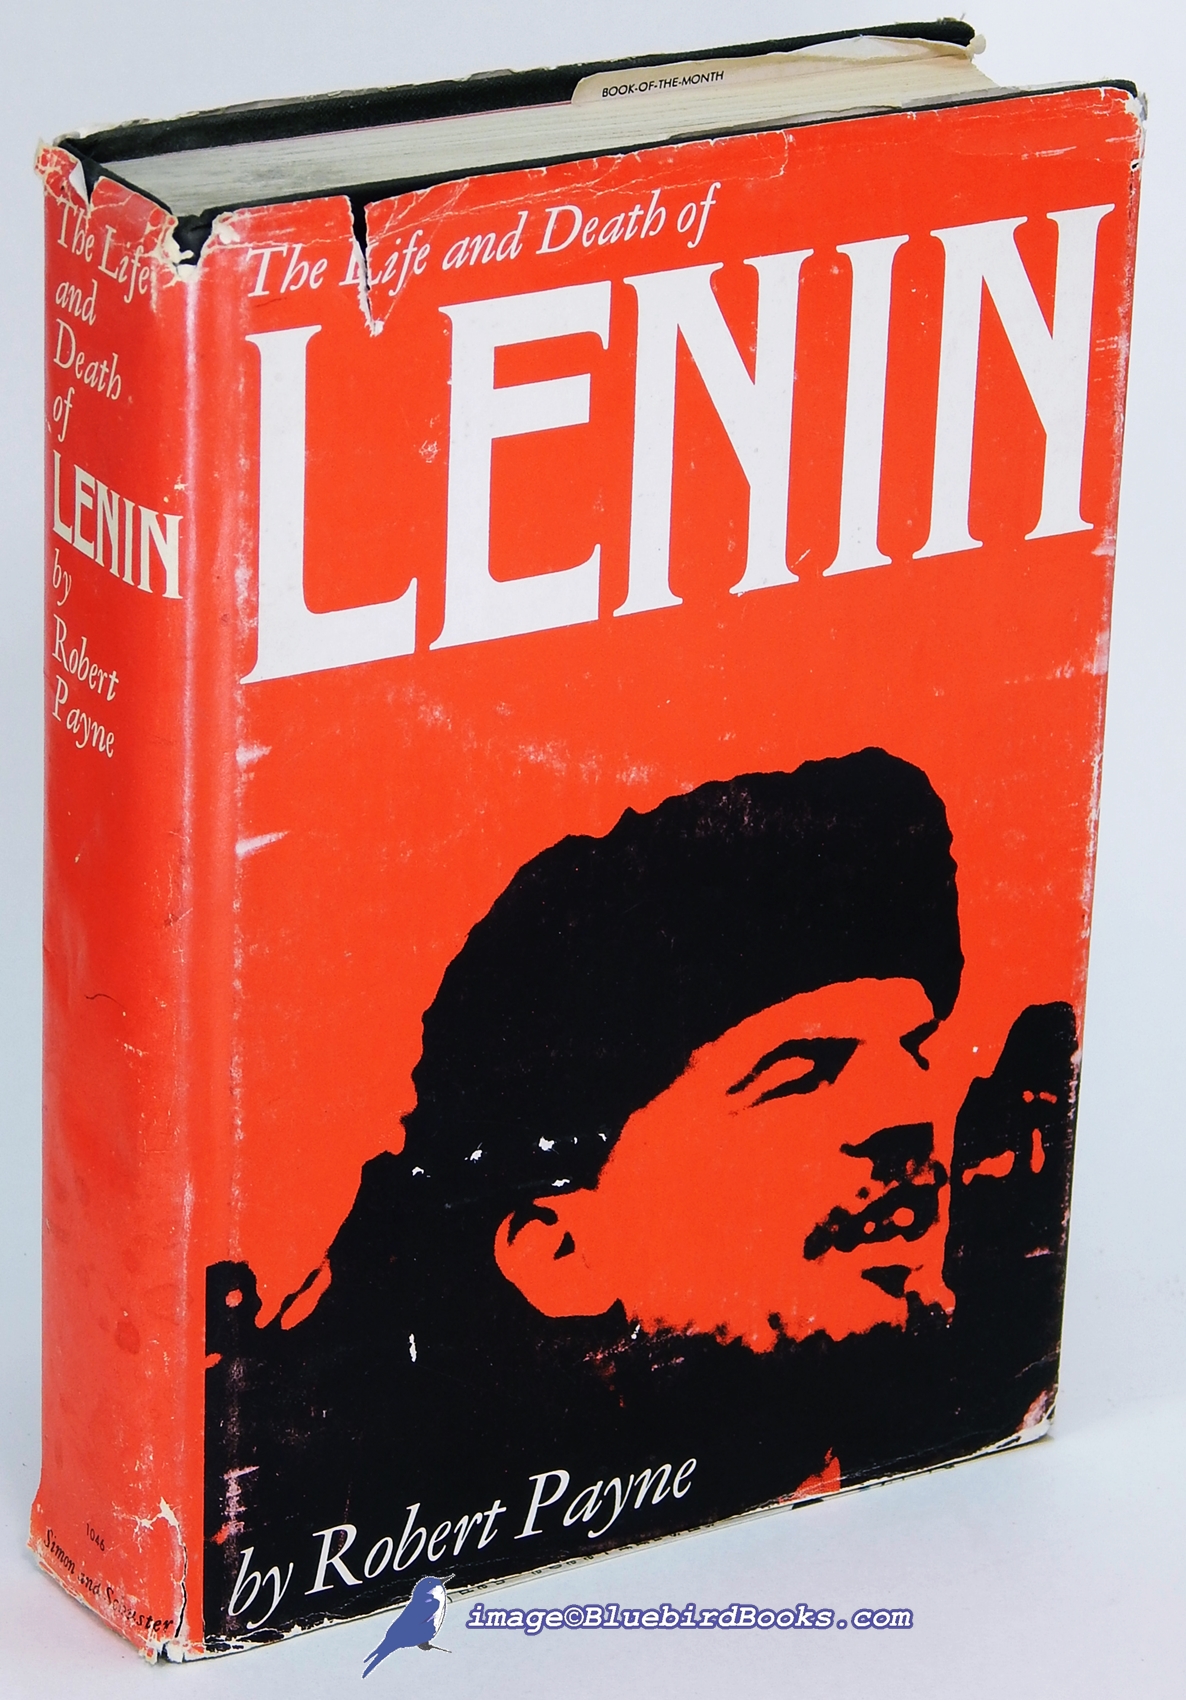 PAYNE, ROBERT - The Life and Death of Lenin